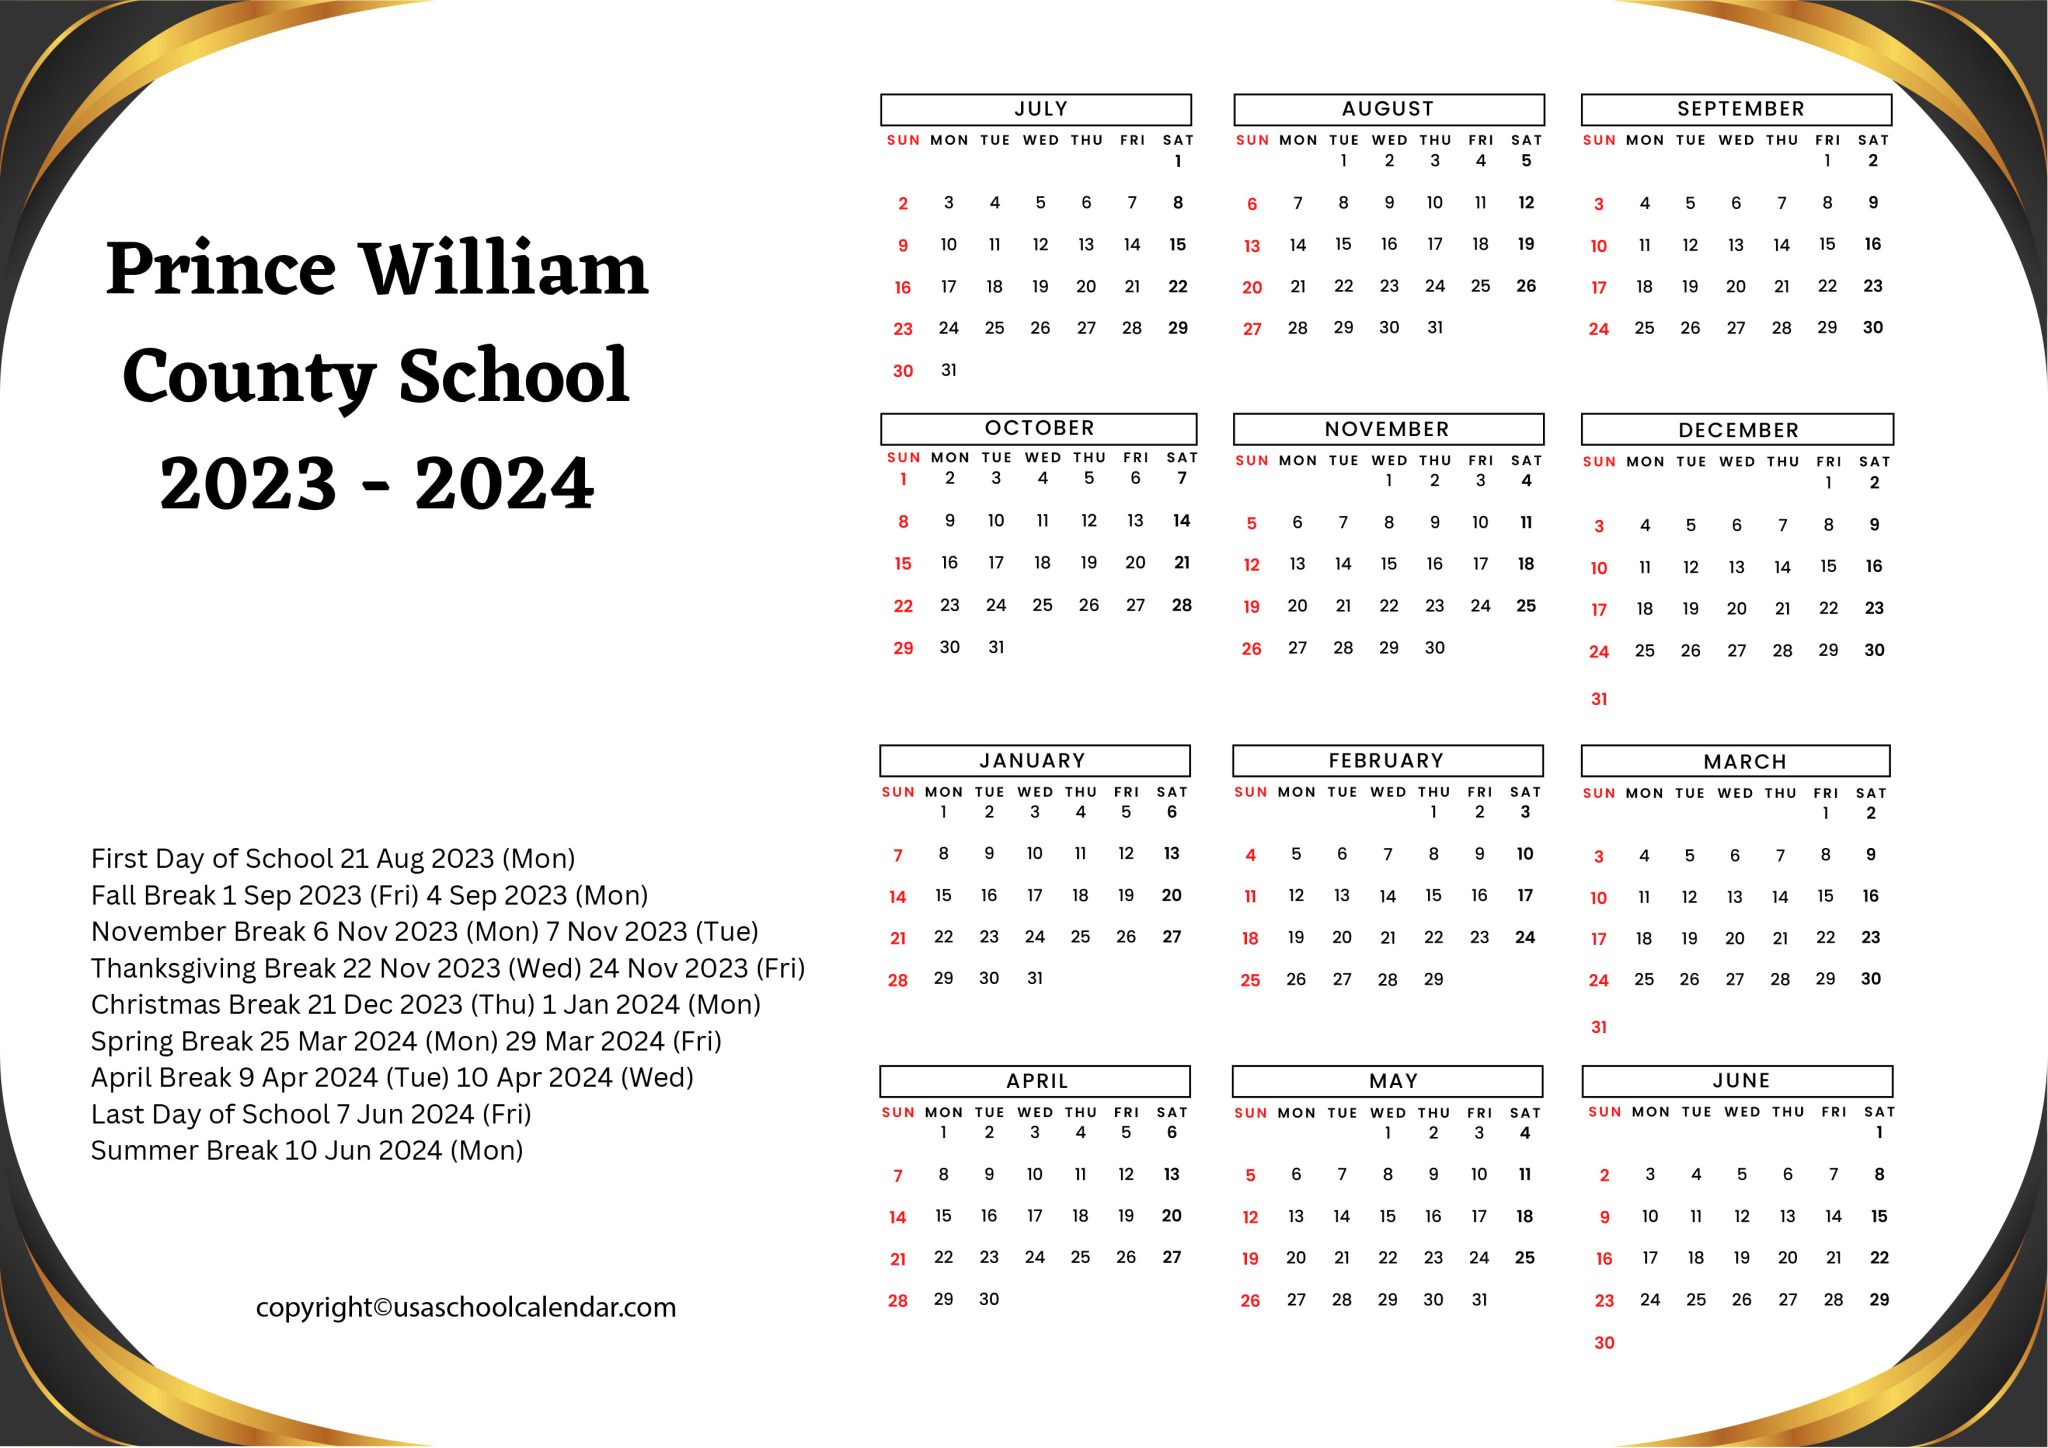 Prince William County School Calendar Holidays 2023 2024